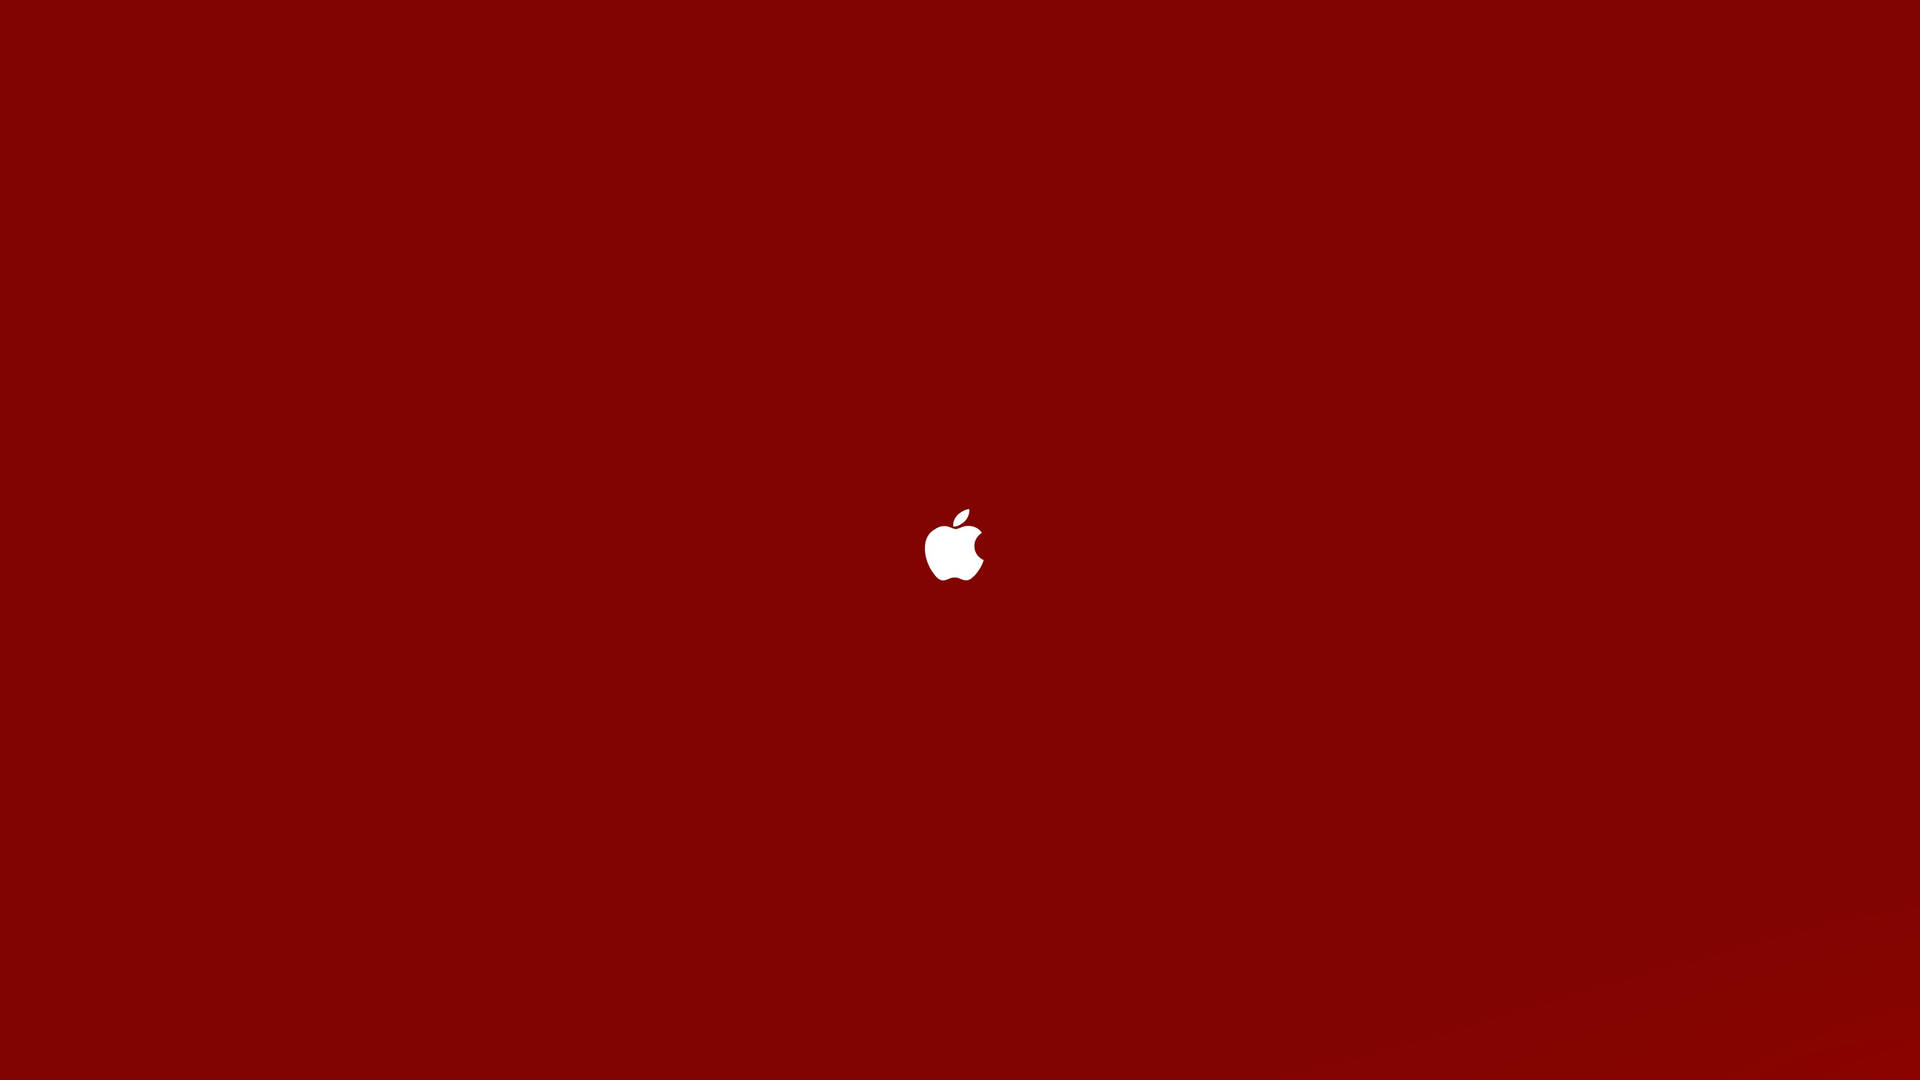 Red Aesthetic Apple 4k Ultra Hd